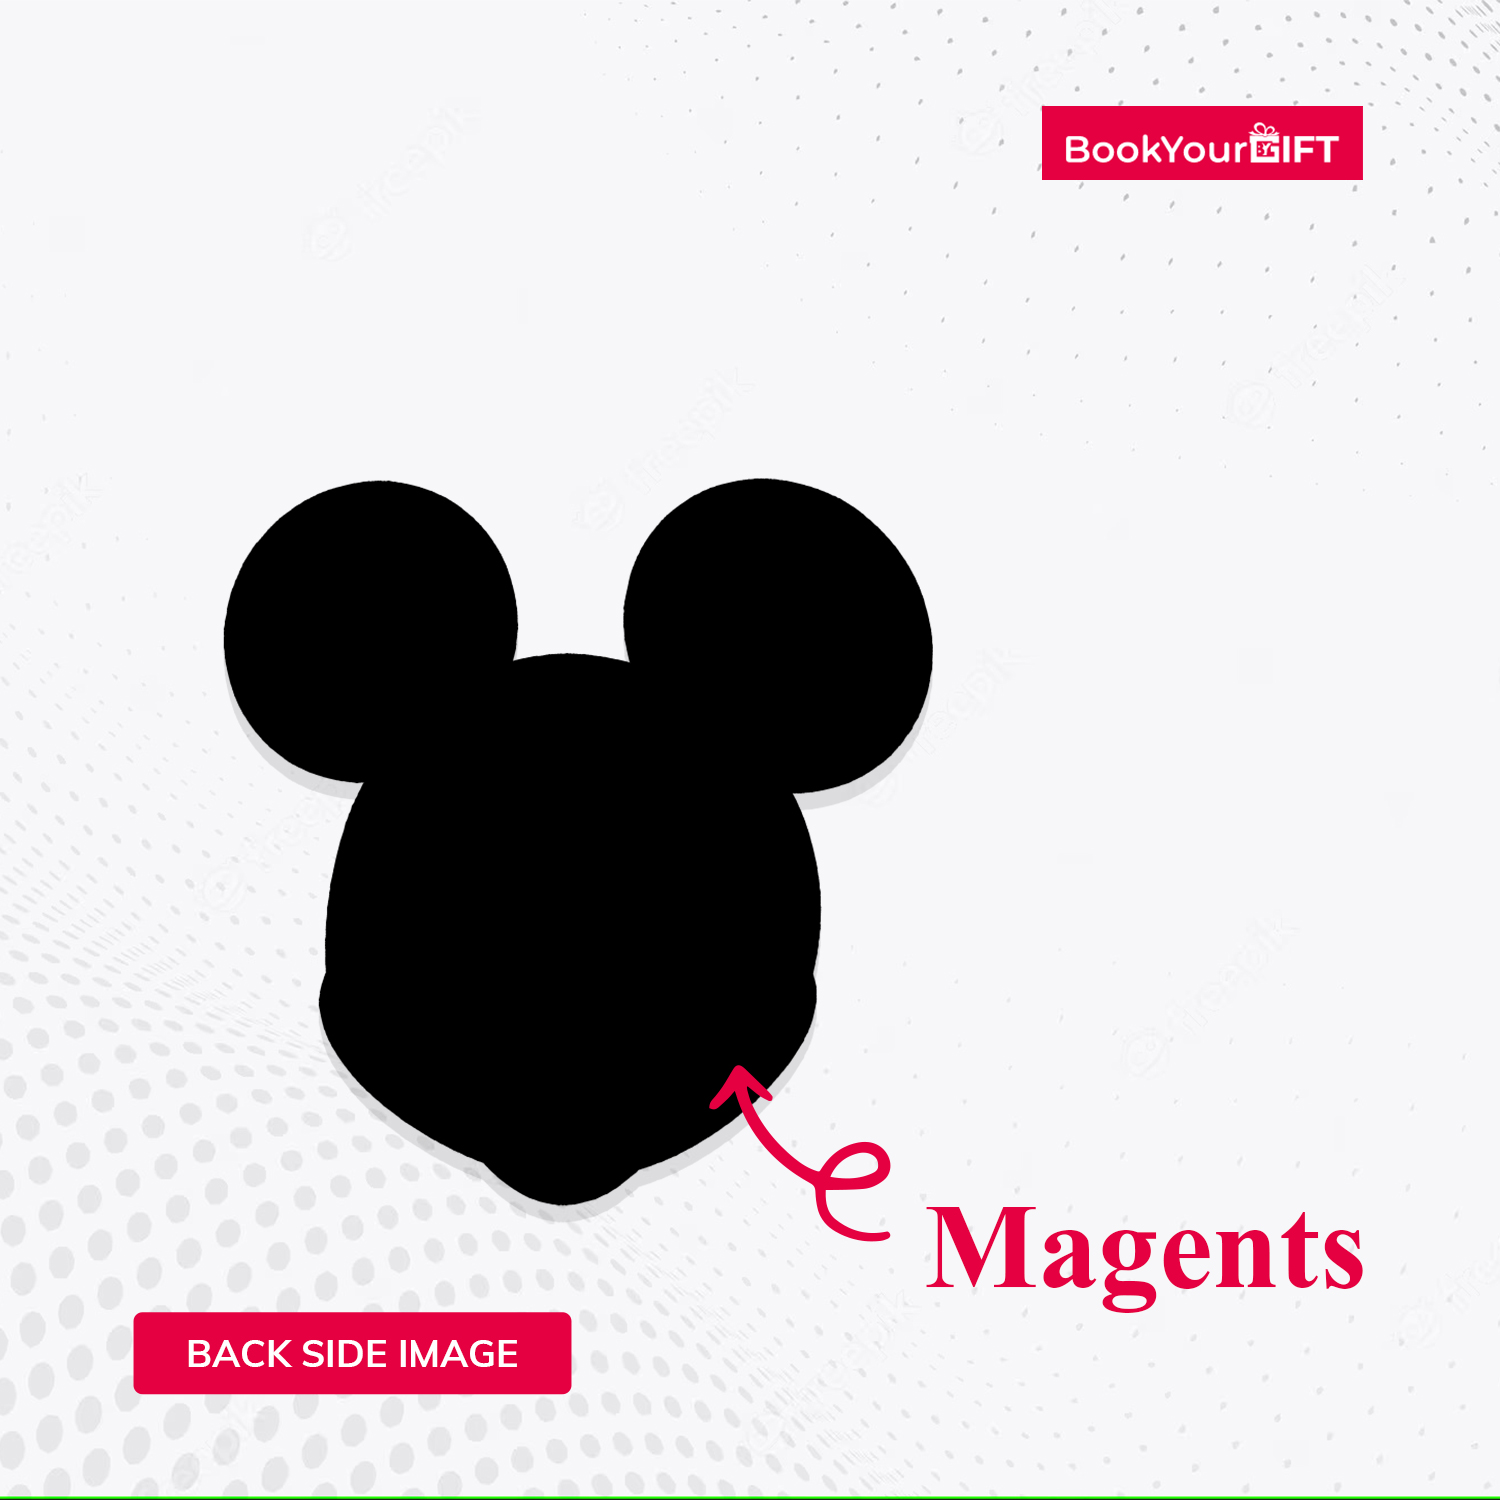 Classic Mickey Mouse Wooden Fridge Magnet - Timeless Disney Charm! Fridge Magnet